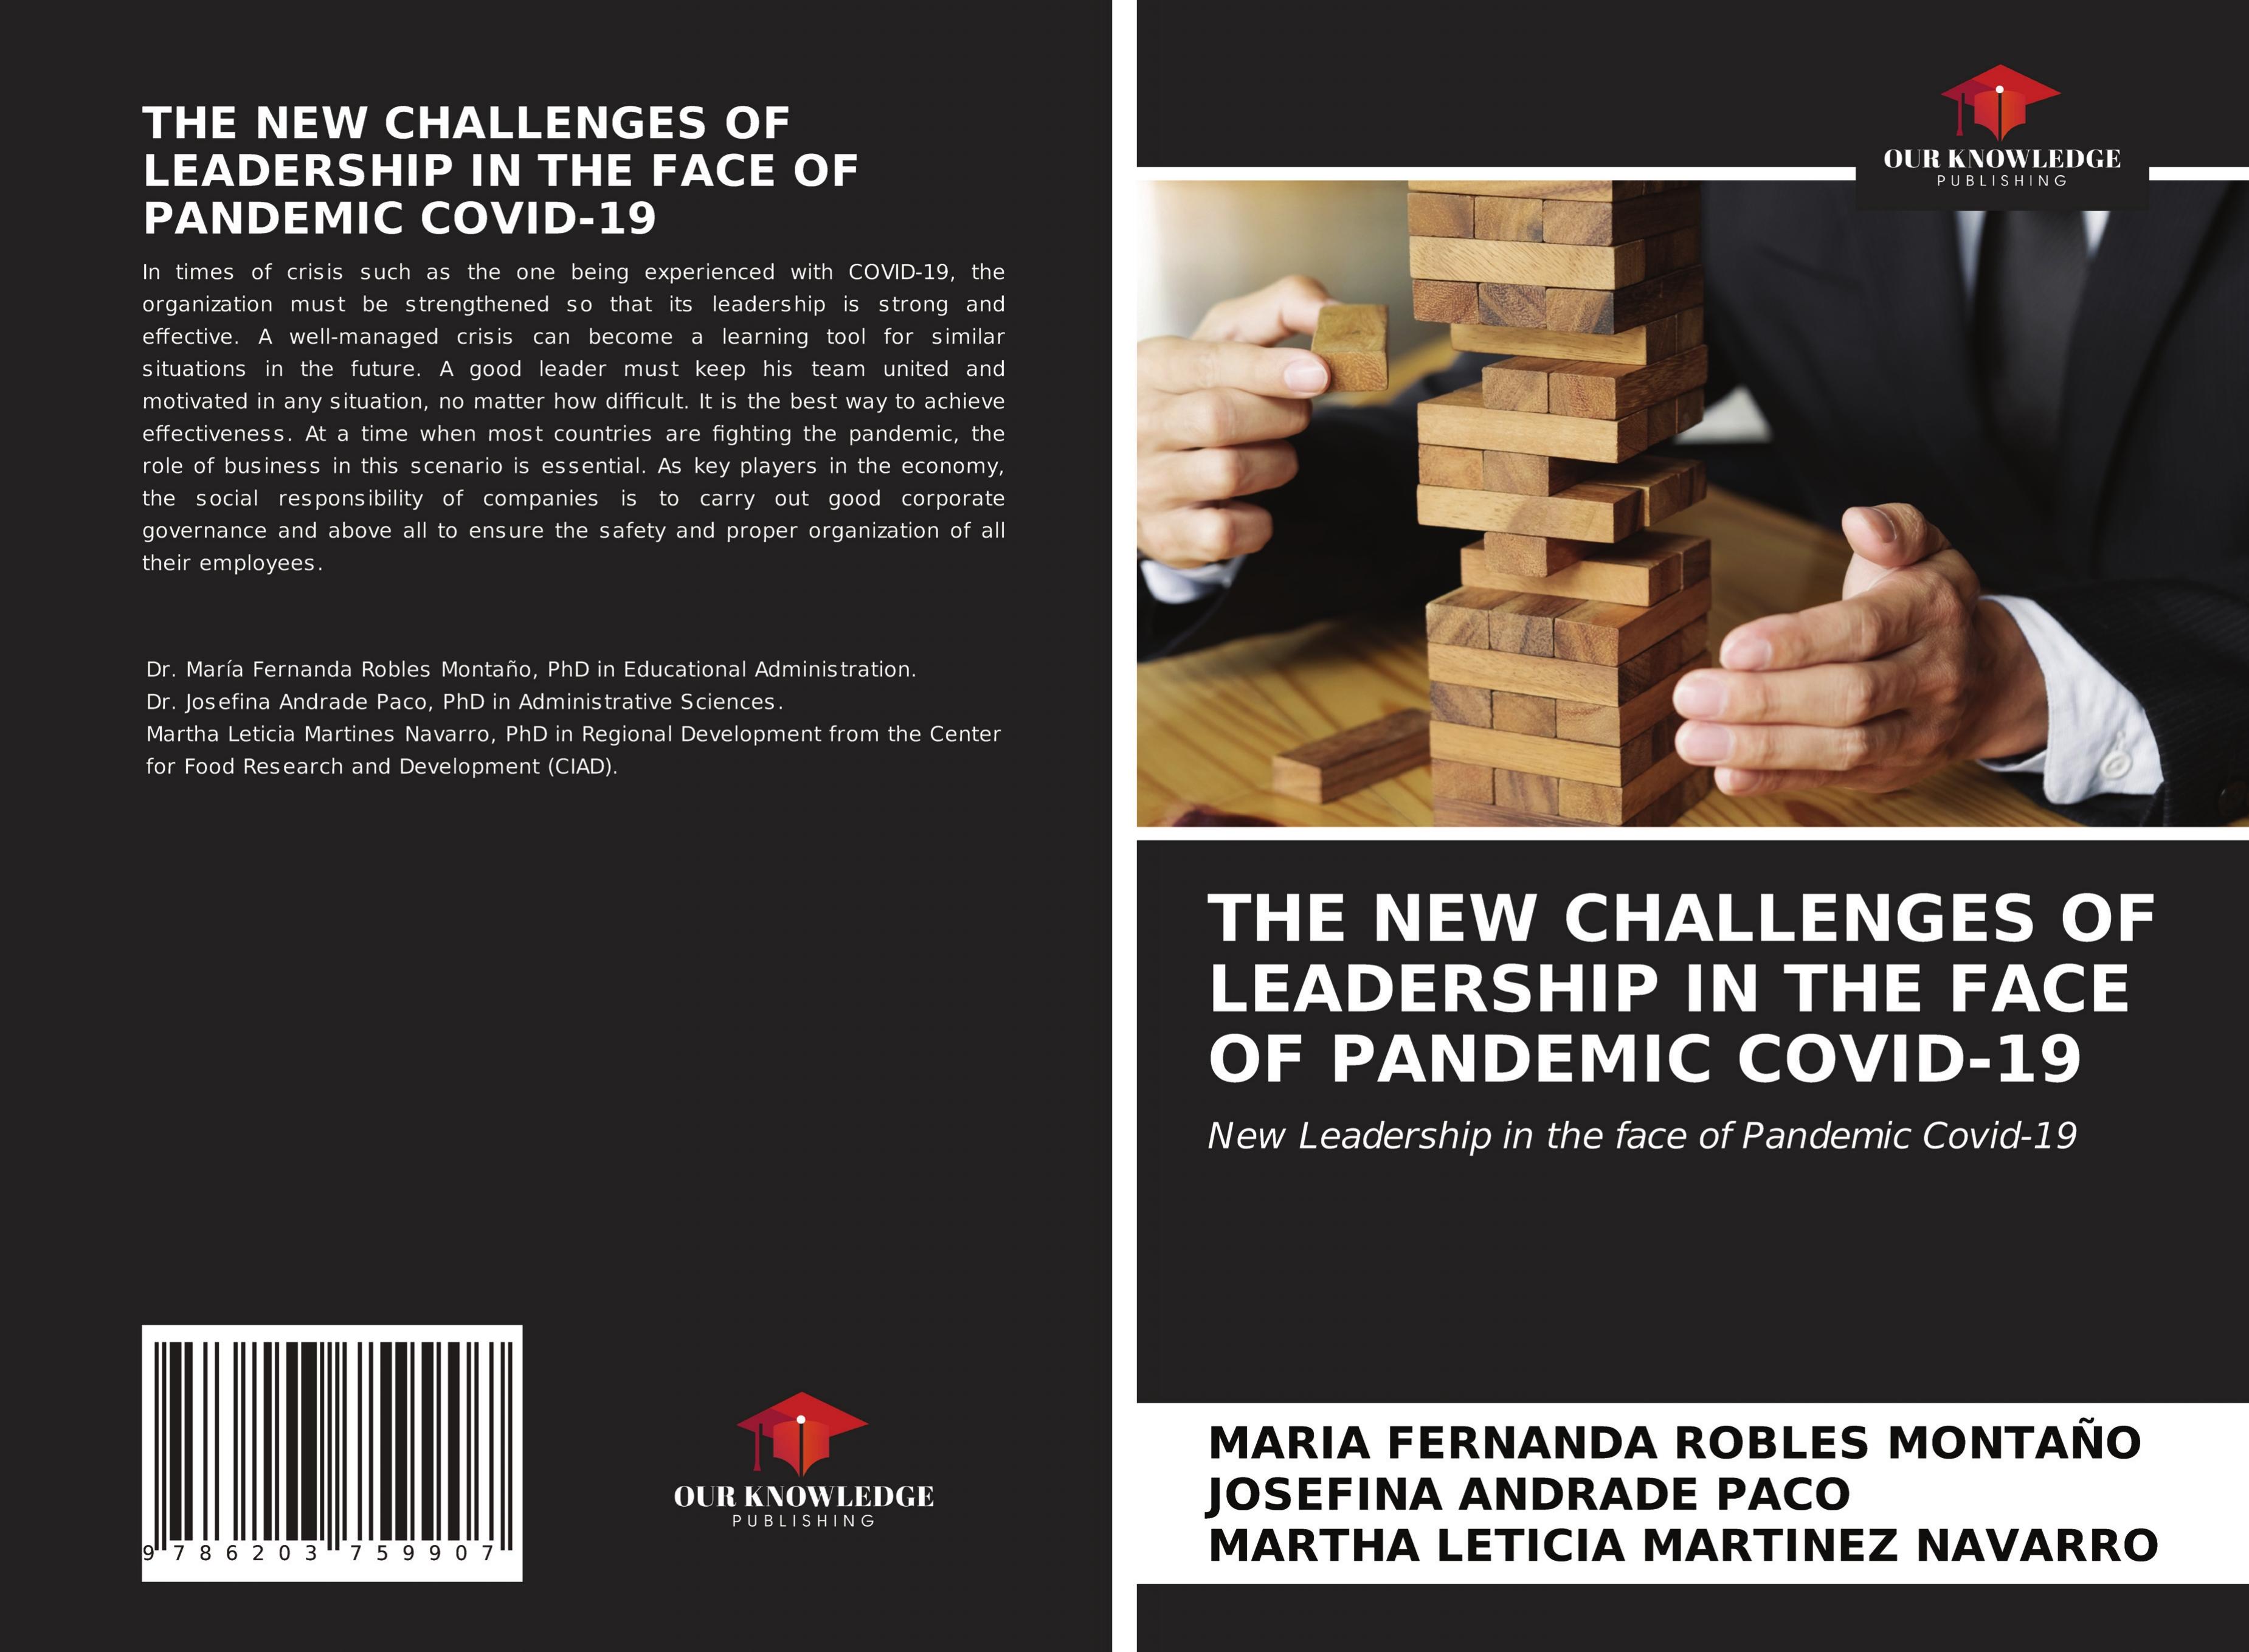 THE NEW CHALLENGES OF LEADERSHIP IN THE FACE OF PANDEMIC COVID-19 - Robles Montaño, Maria Fernanda Andrade Paco, Josefina MARTINEZ NAVARRO, MARTHA LETICIA